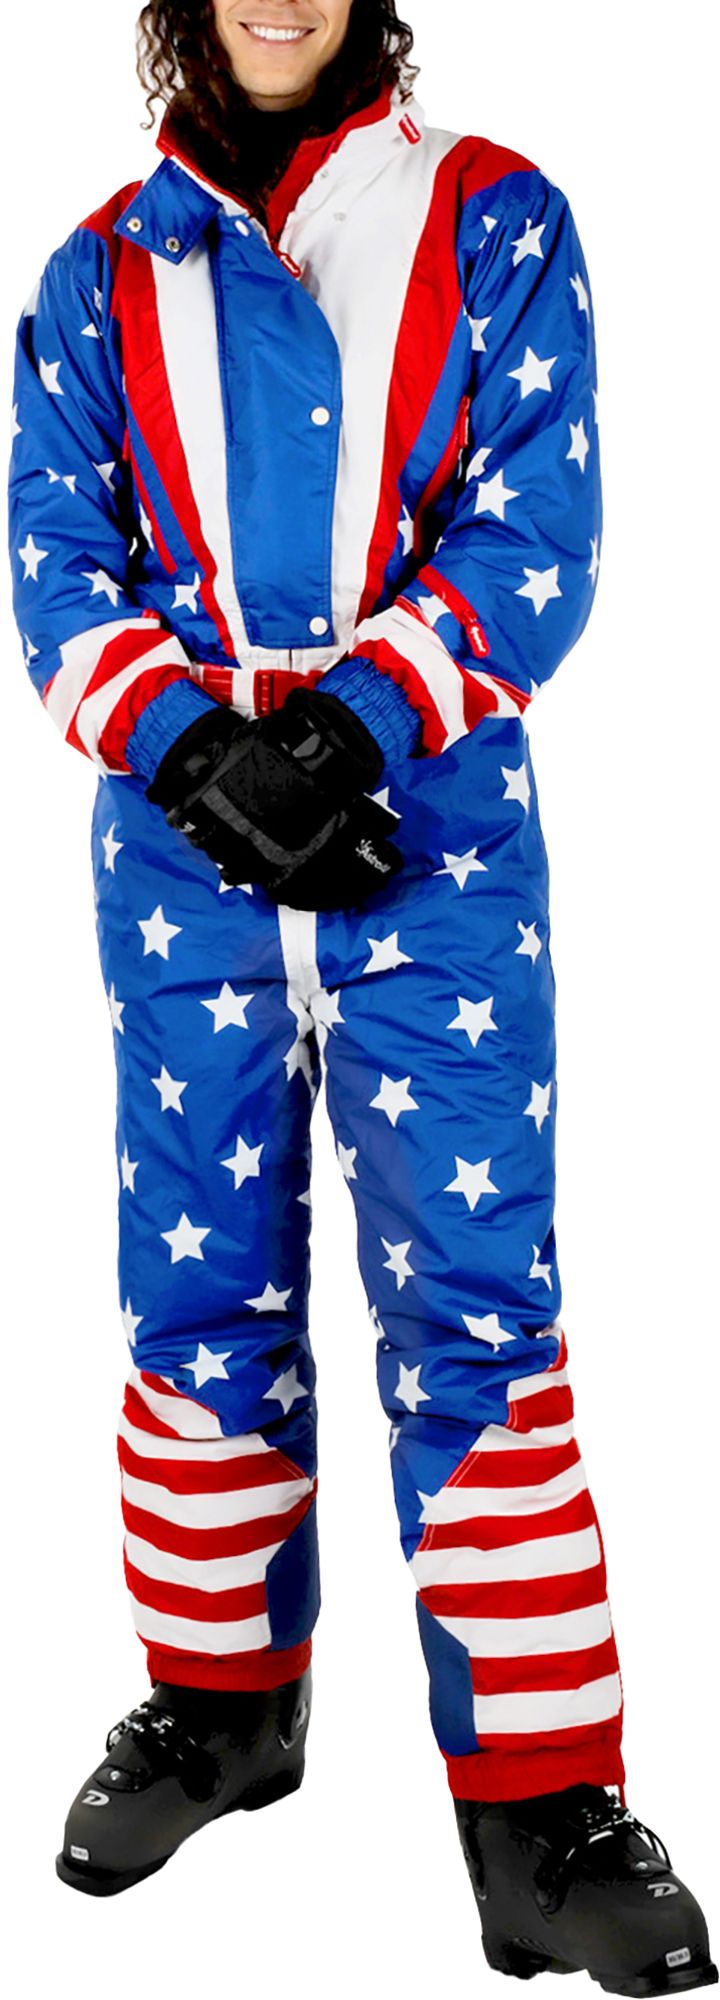 Photos - Ski Wear Tipsy Elves Men's Americana Snow Suit, Large, Blue 22DBPMMMRCNSKSTXXMOU